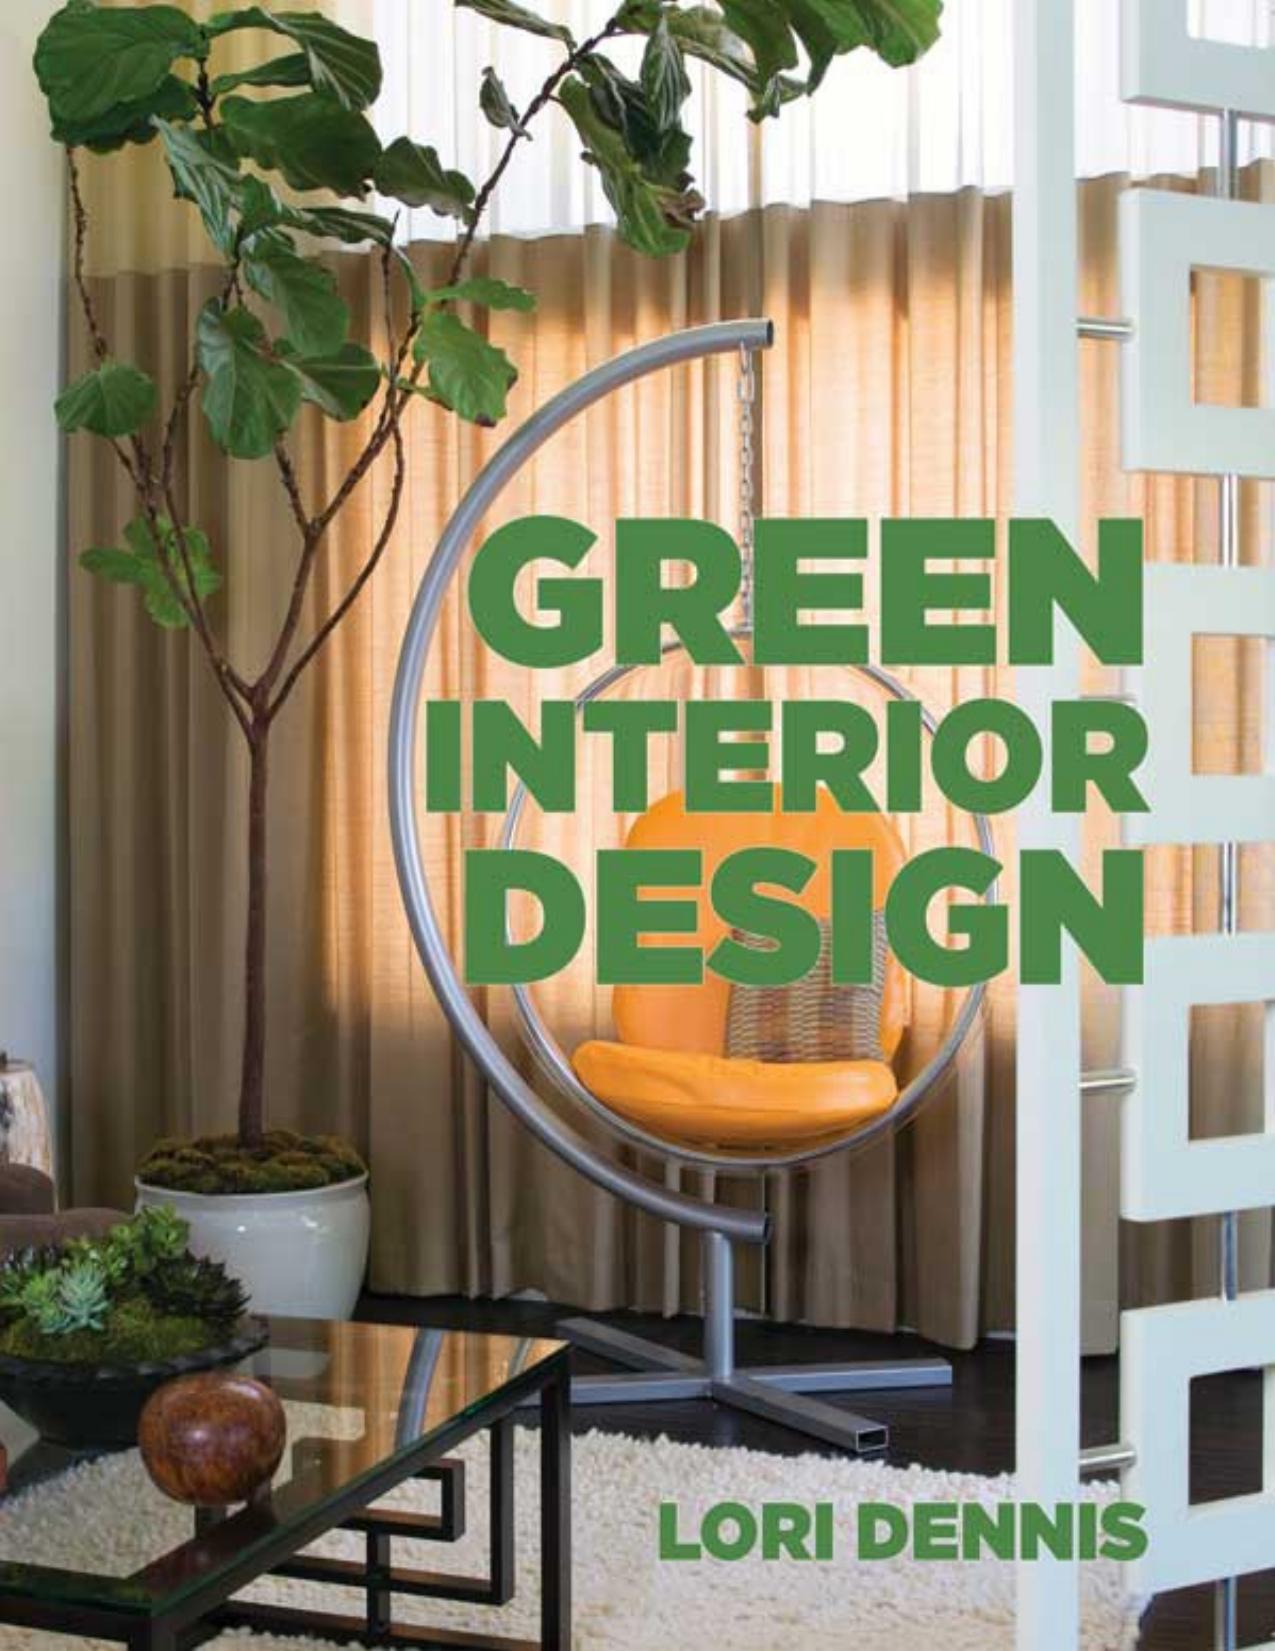 Green Interior Design by Lori Dennis